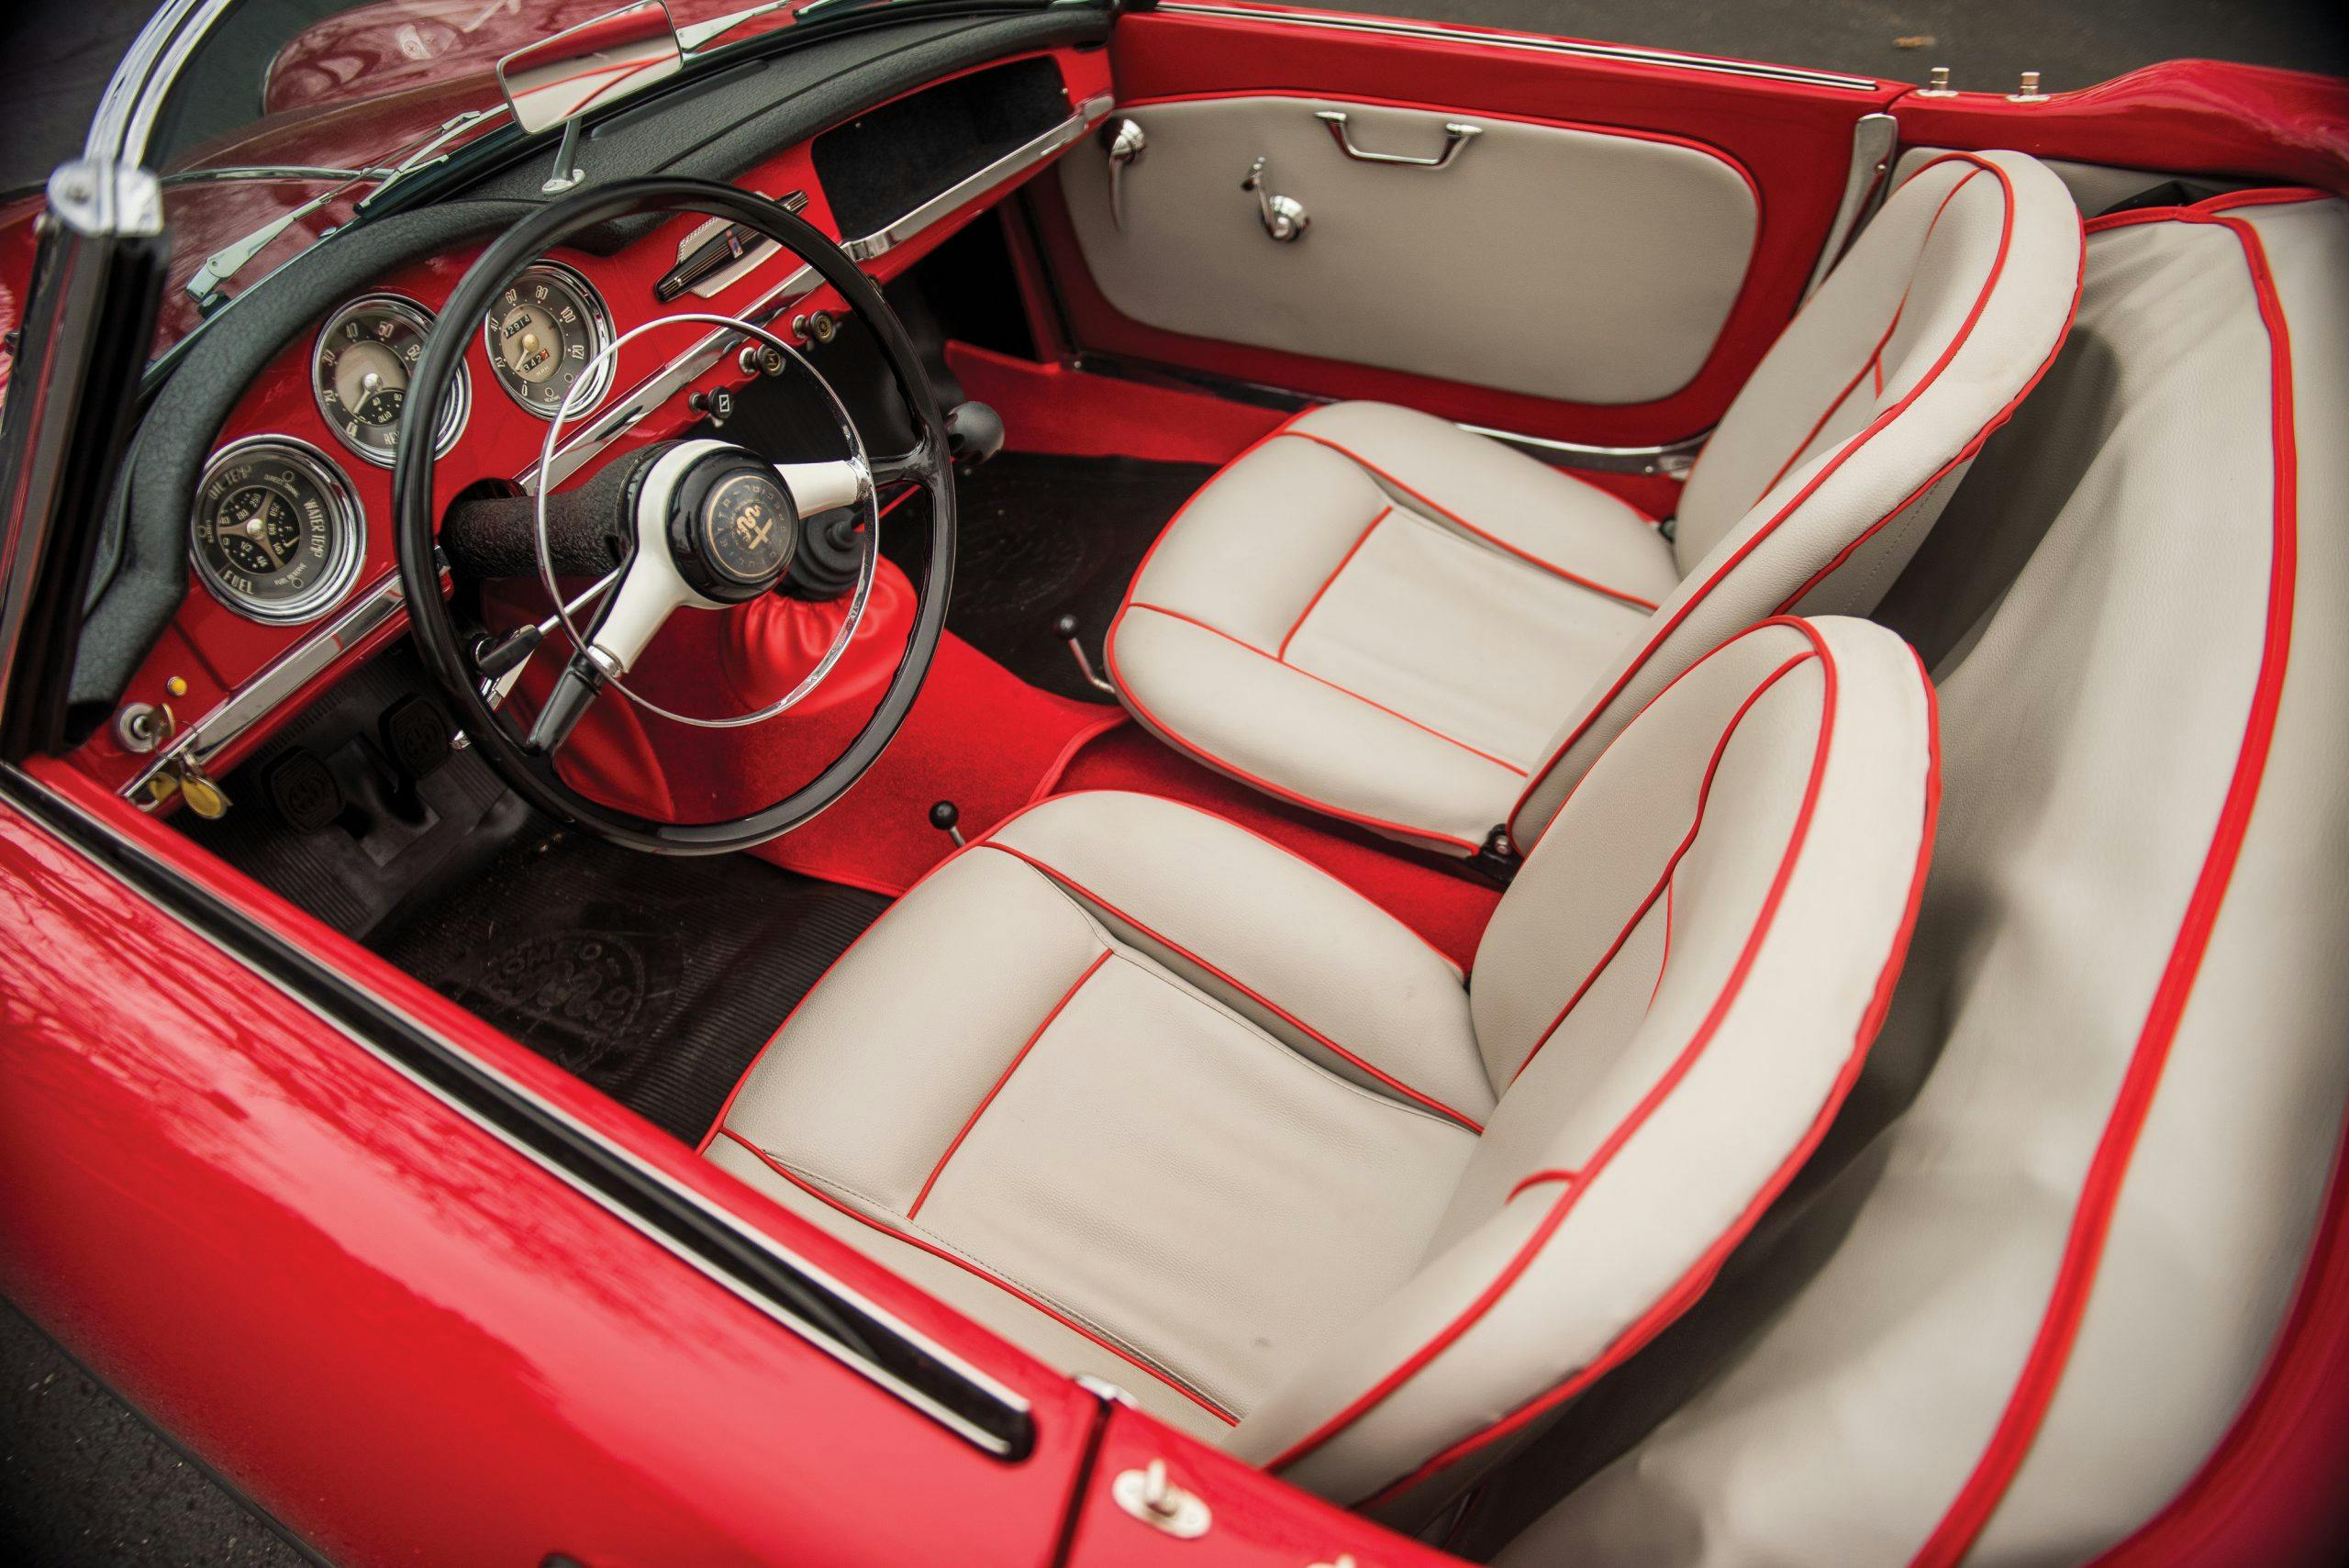 1959 Alfa Romeo Giulietta Spider interior